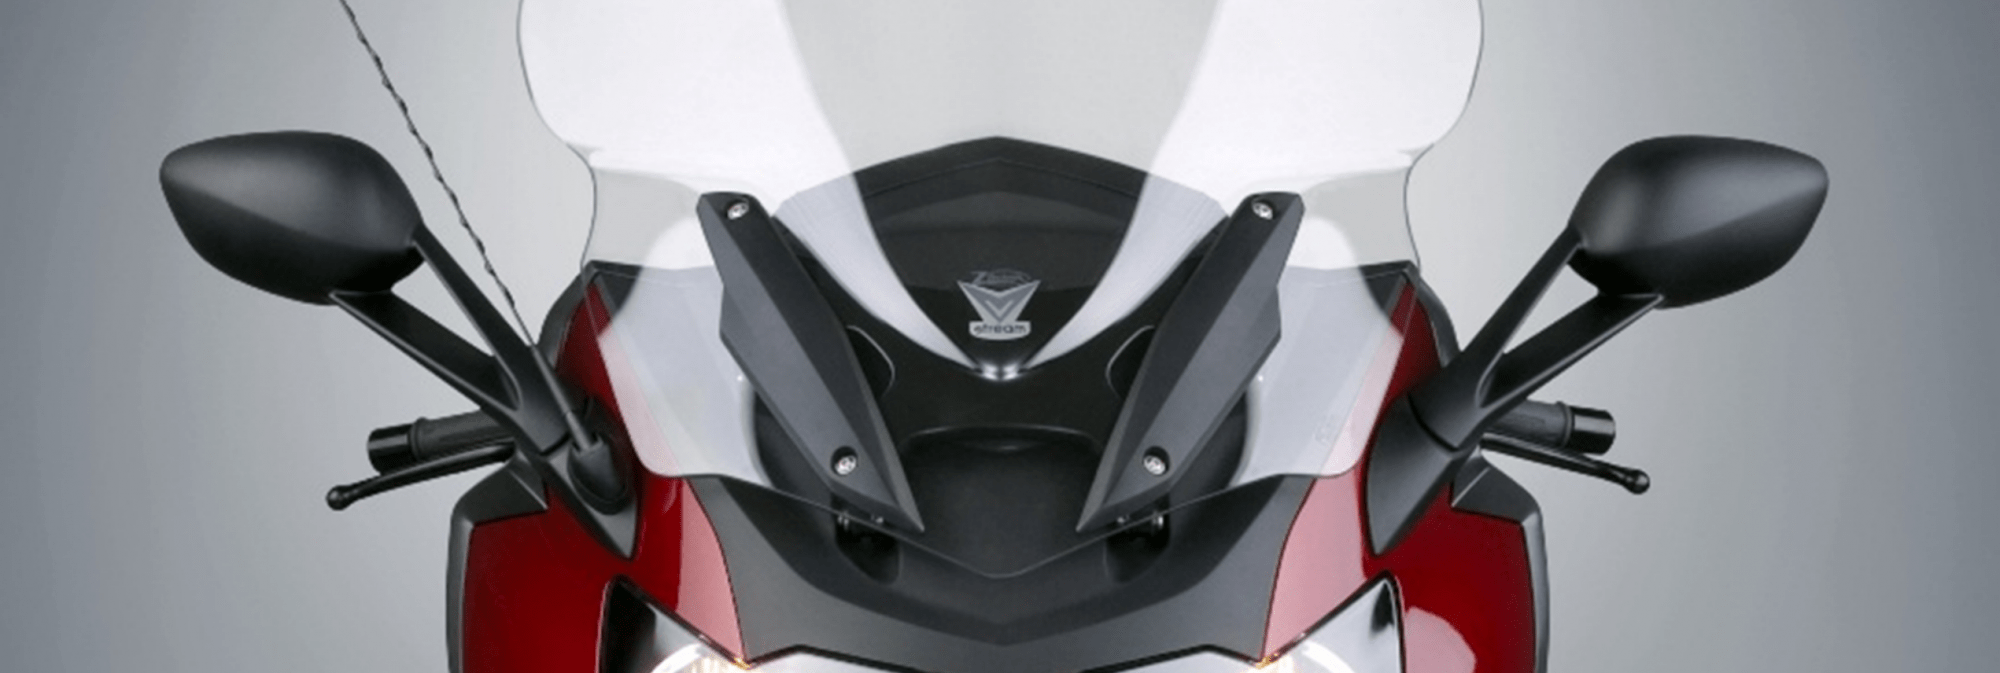 Motorcycle windshields